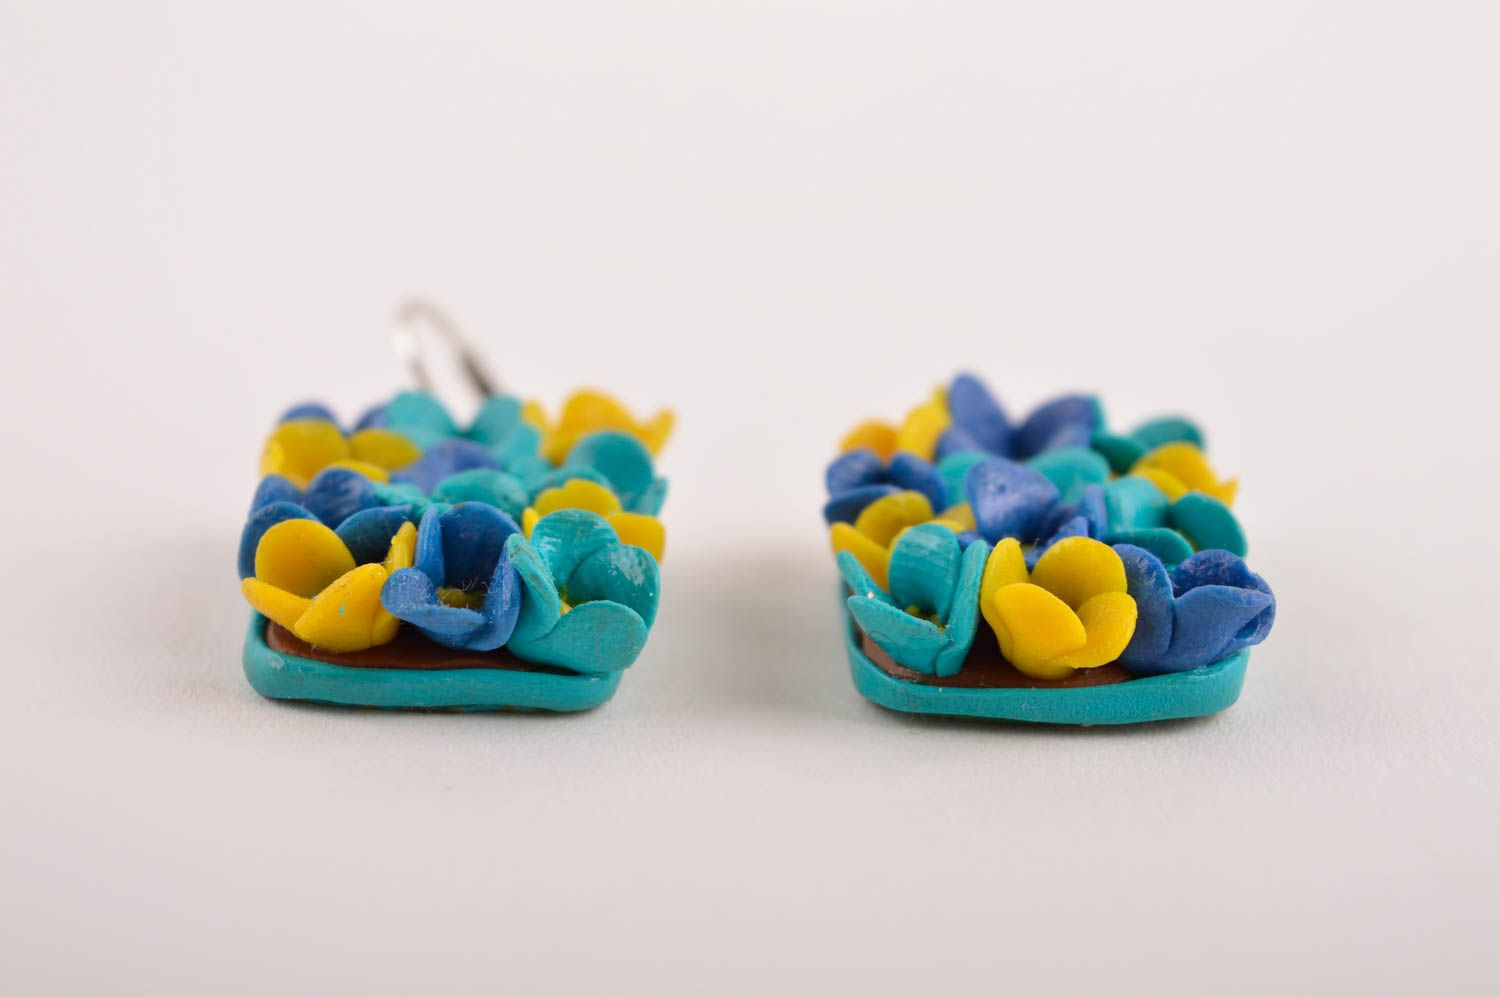 Handmade earrings designer clay earrings flowers earrings for women gift ideas photo 4